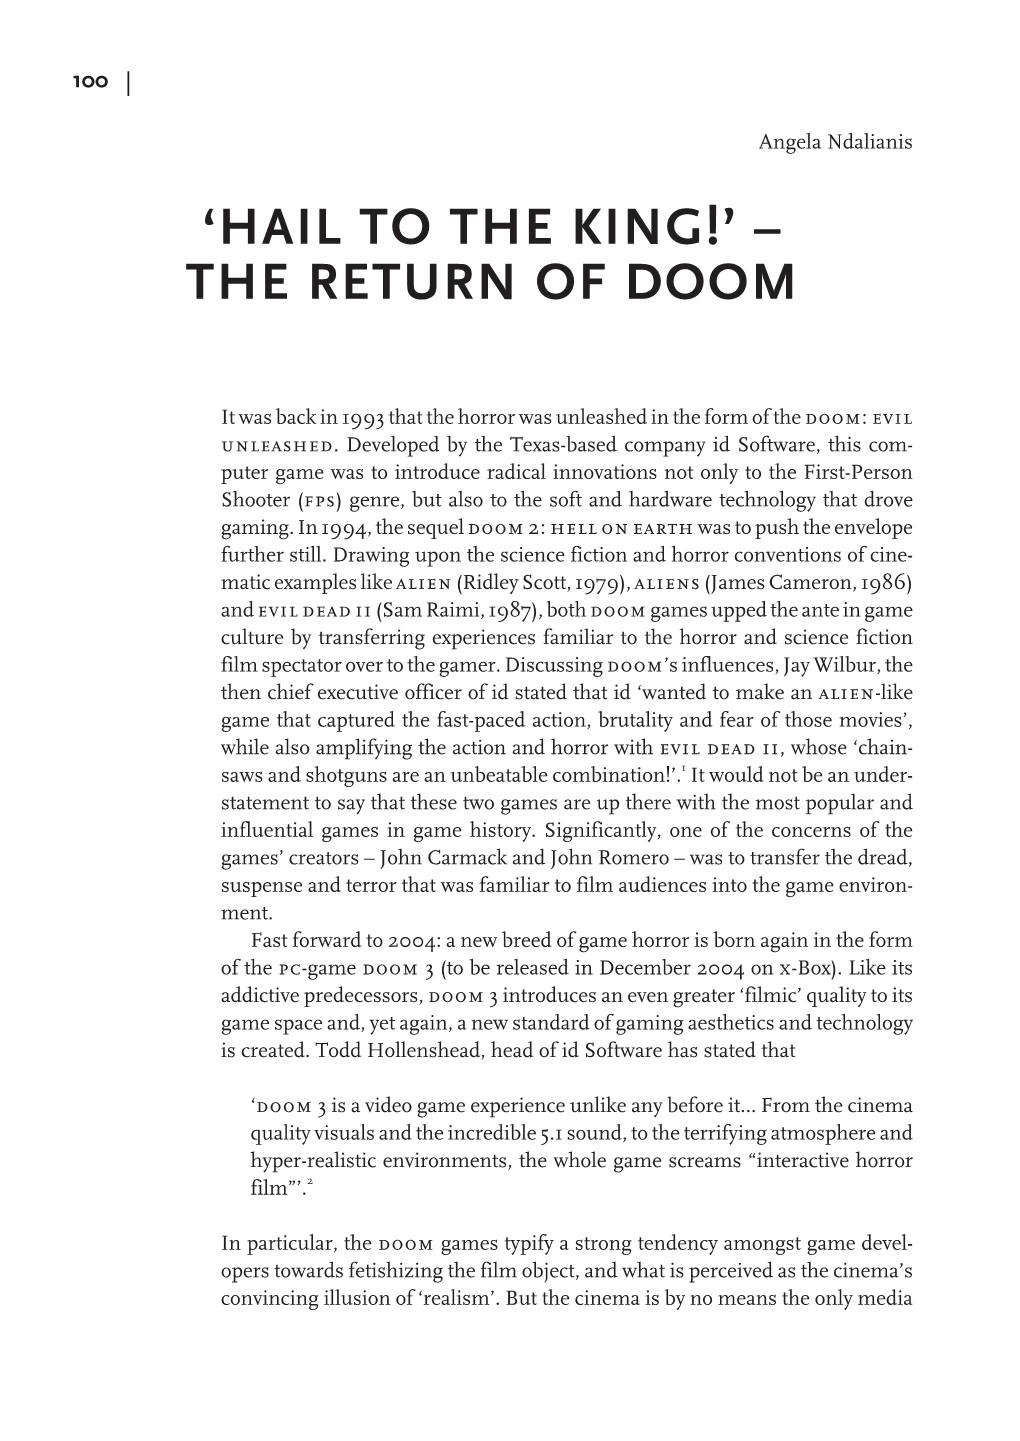 The Return of Doom